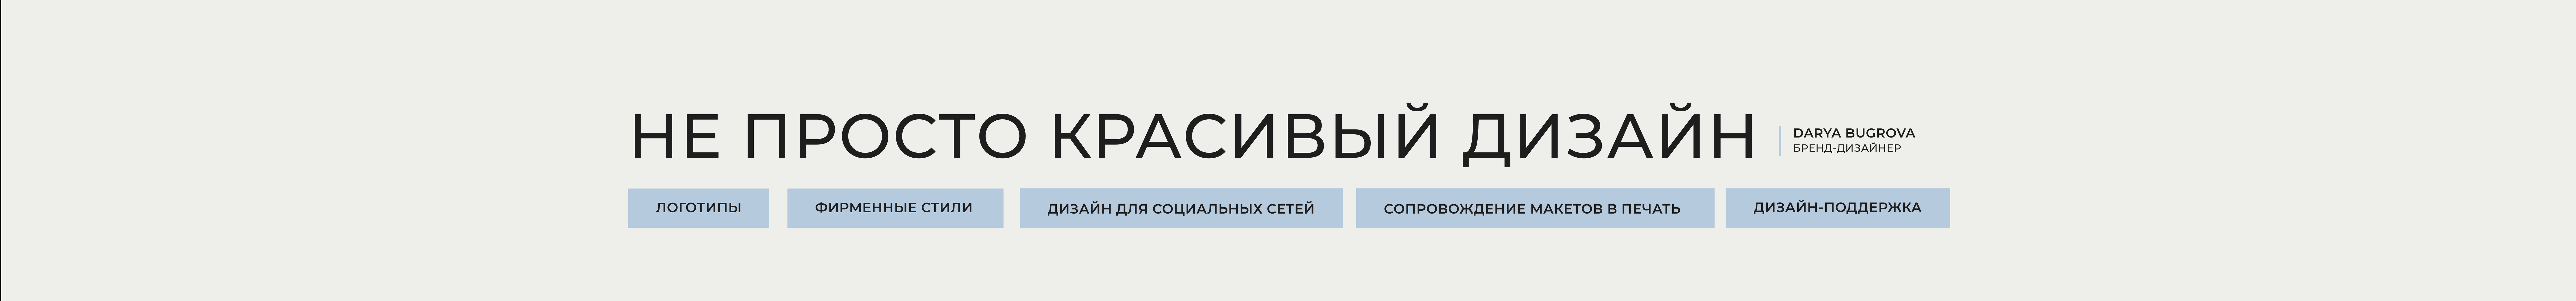 Baner profilu użytkownika DARYA BUGROVA